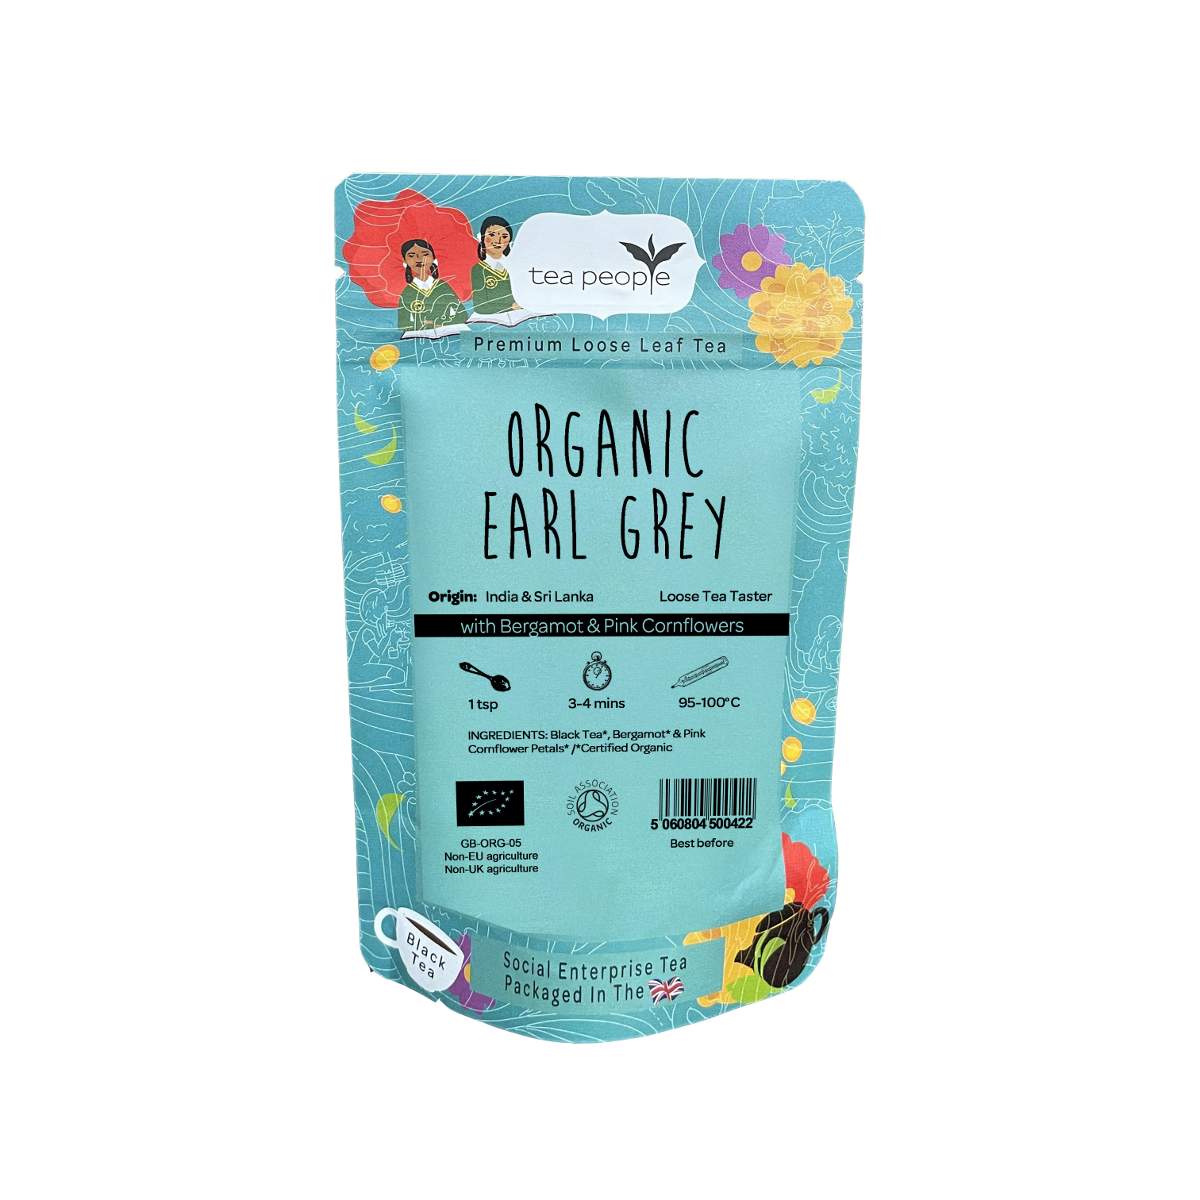 Organic Earl Grey - Loose Black Tea - Loose Tea Taster